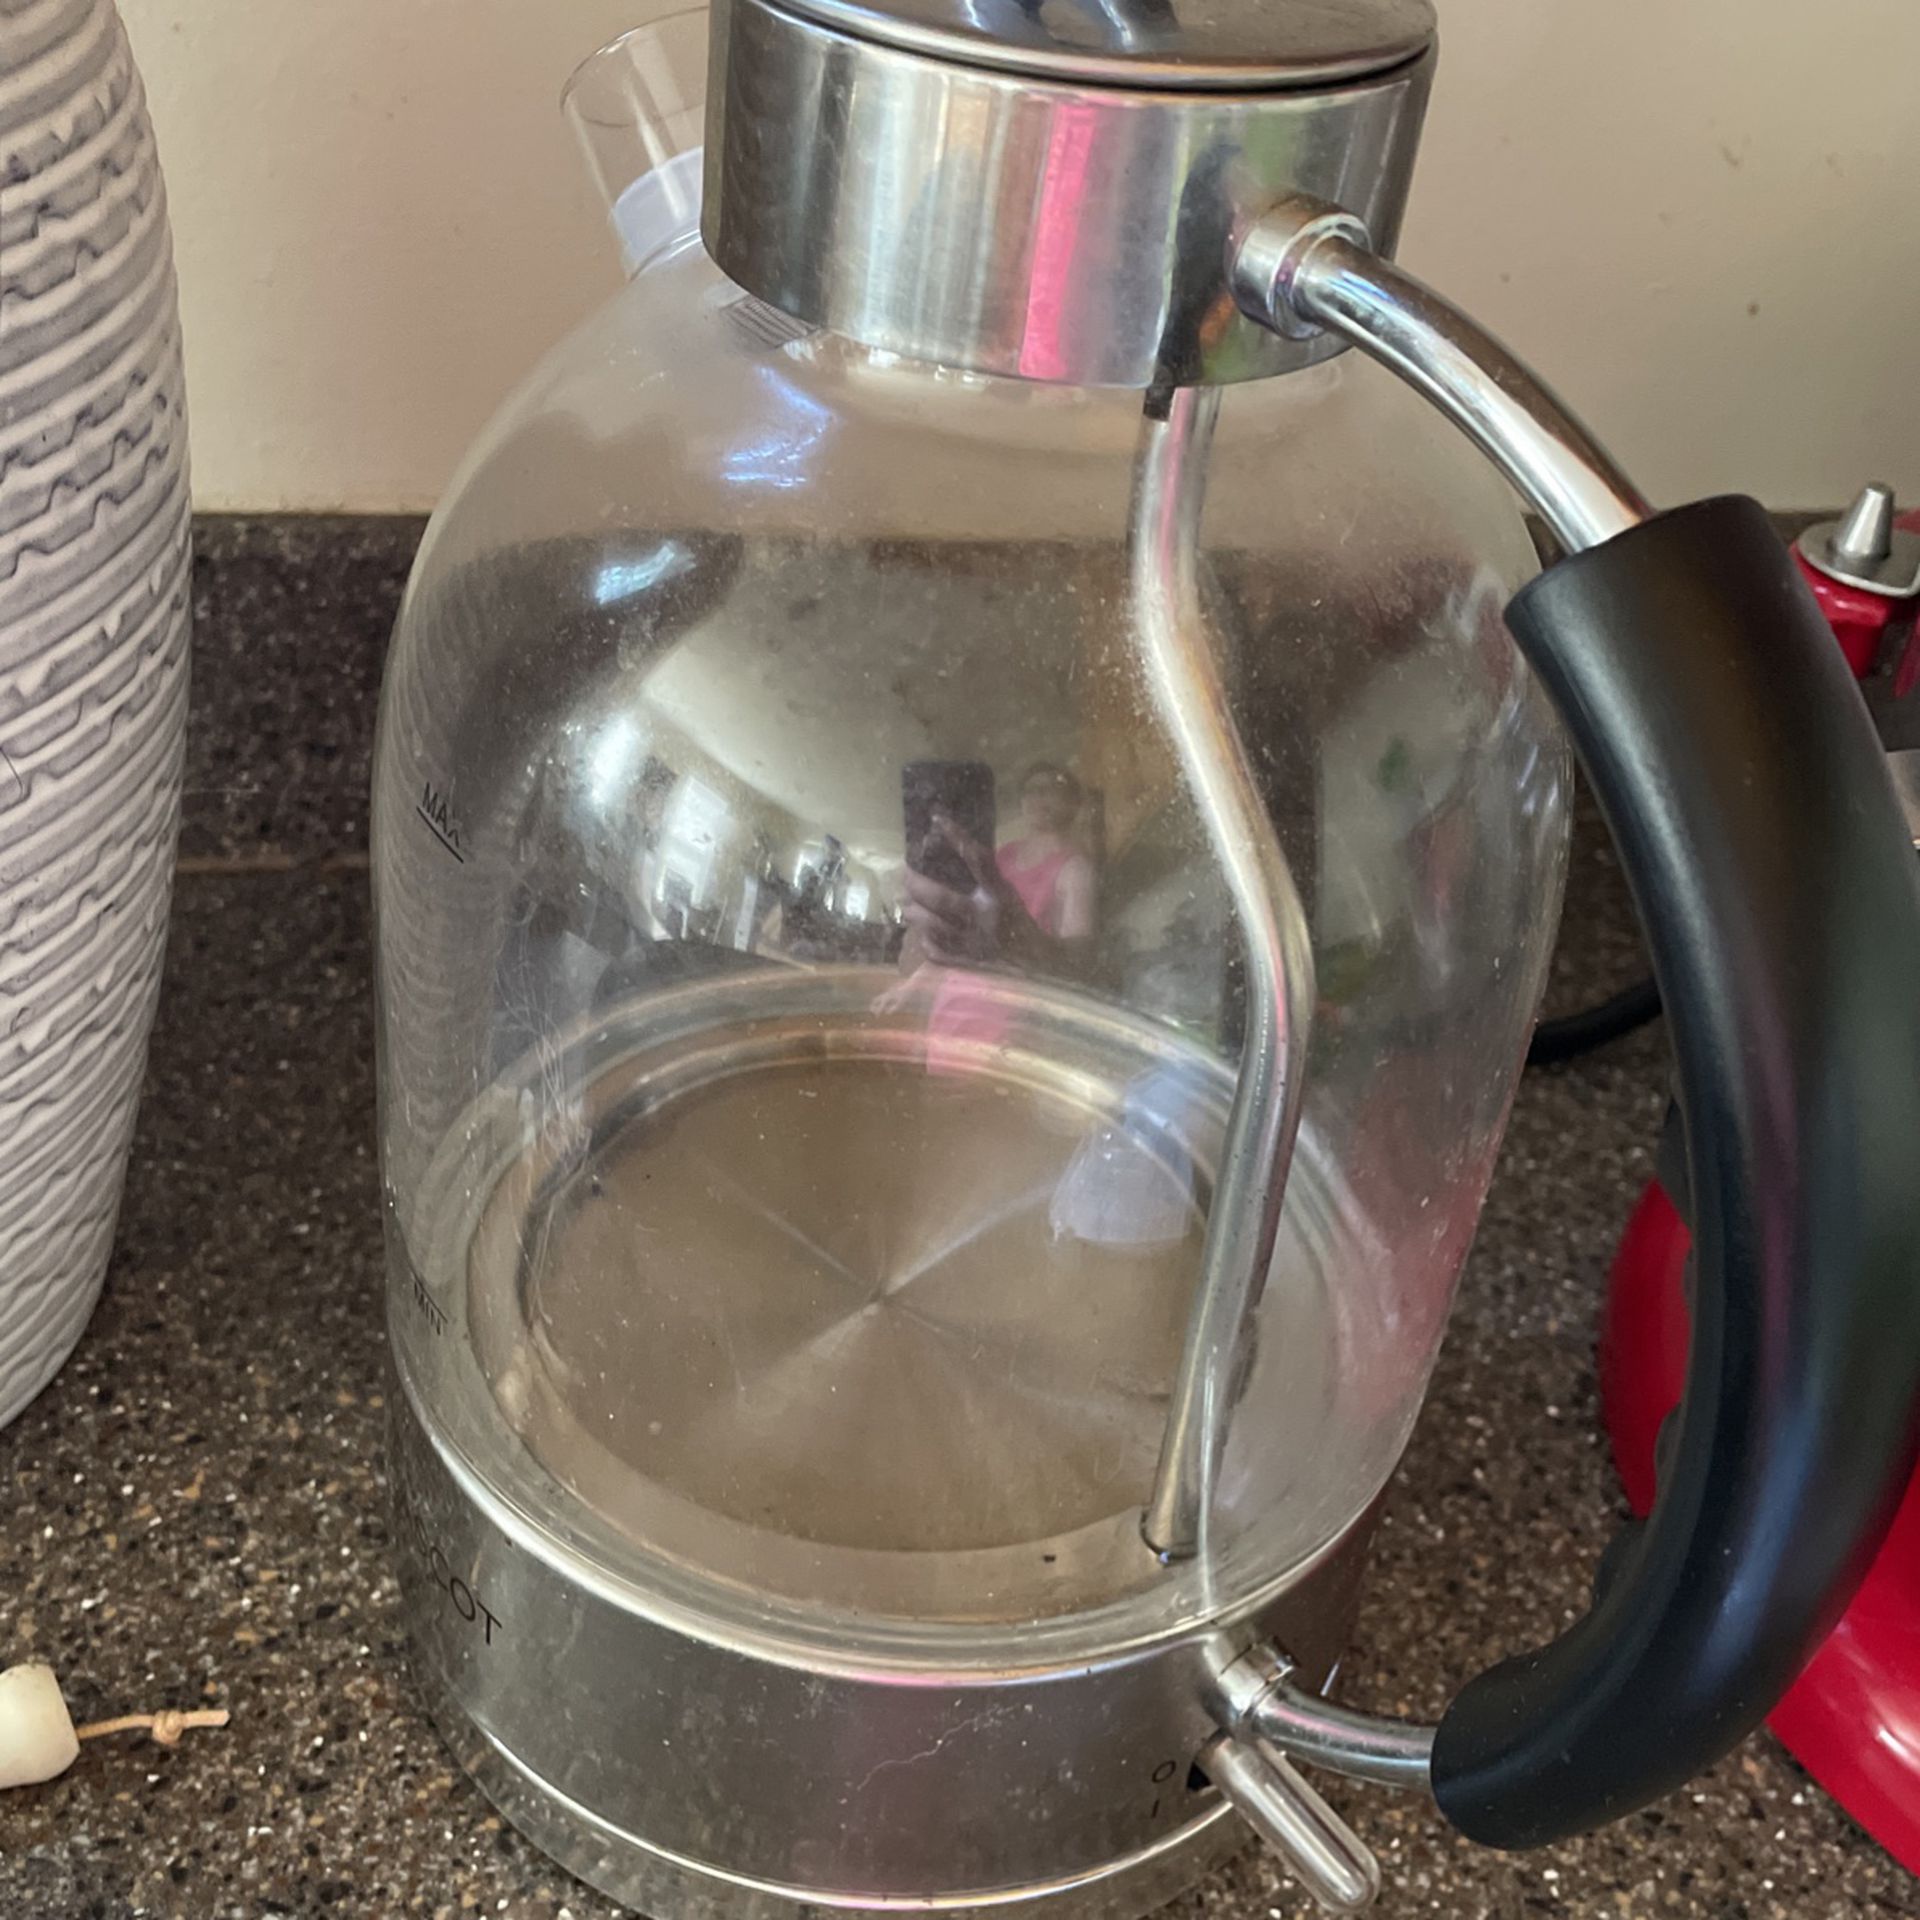 Hot water kettle